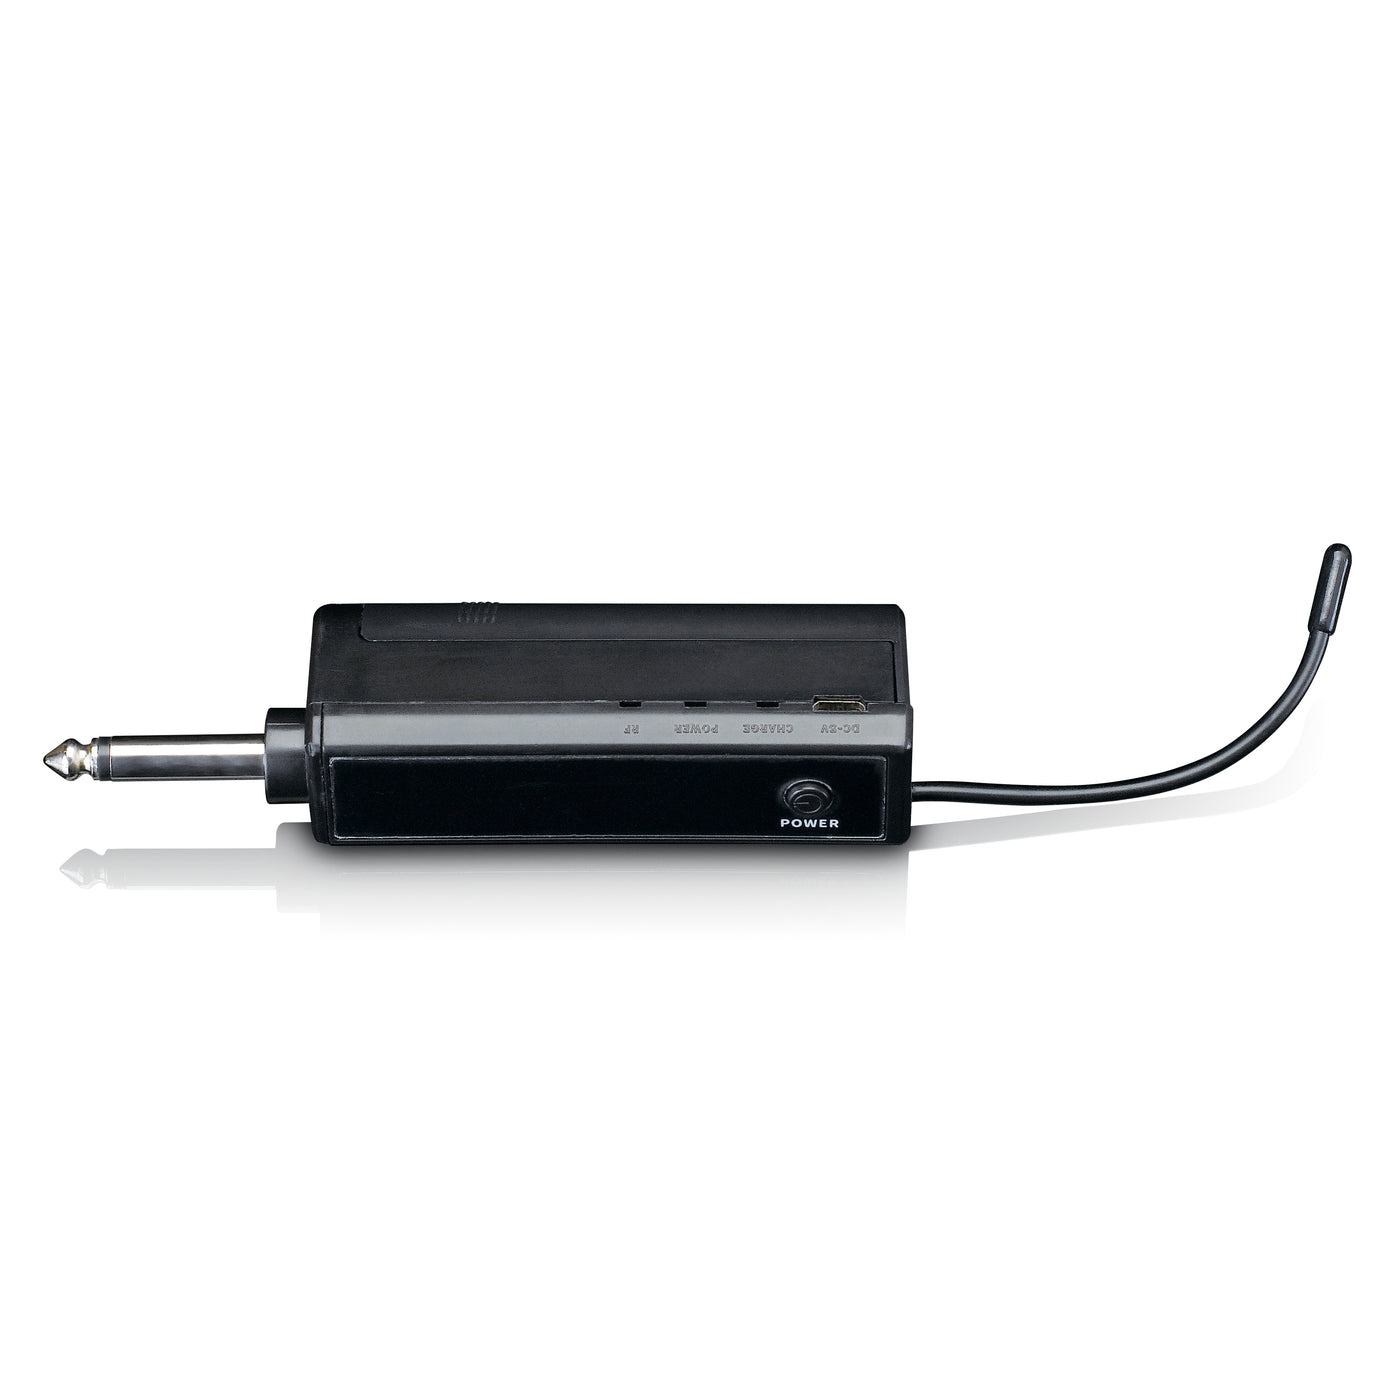 LENCO - MCW-011BK - Draadloze Microfoon met 6,3 mm ontvanger